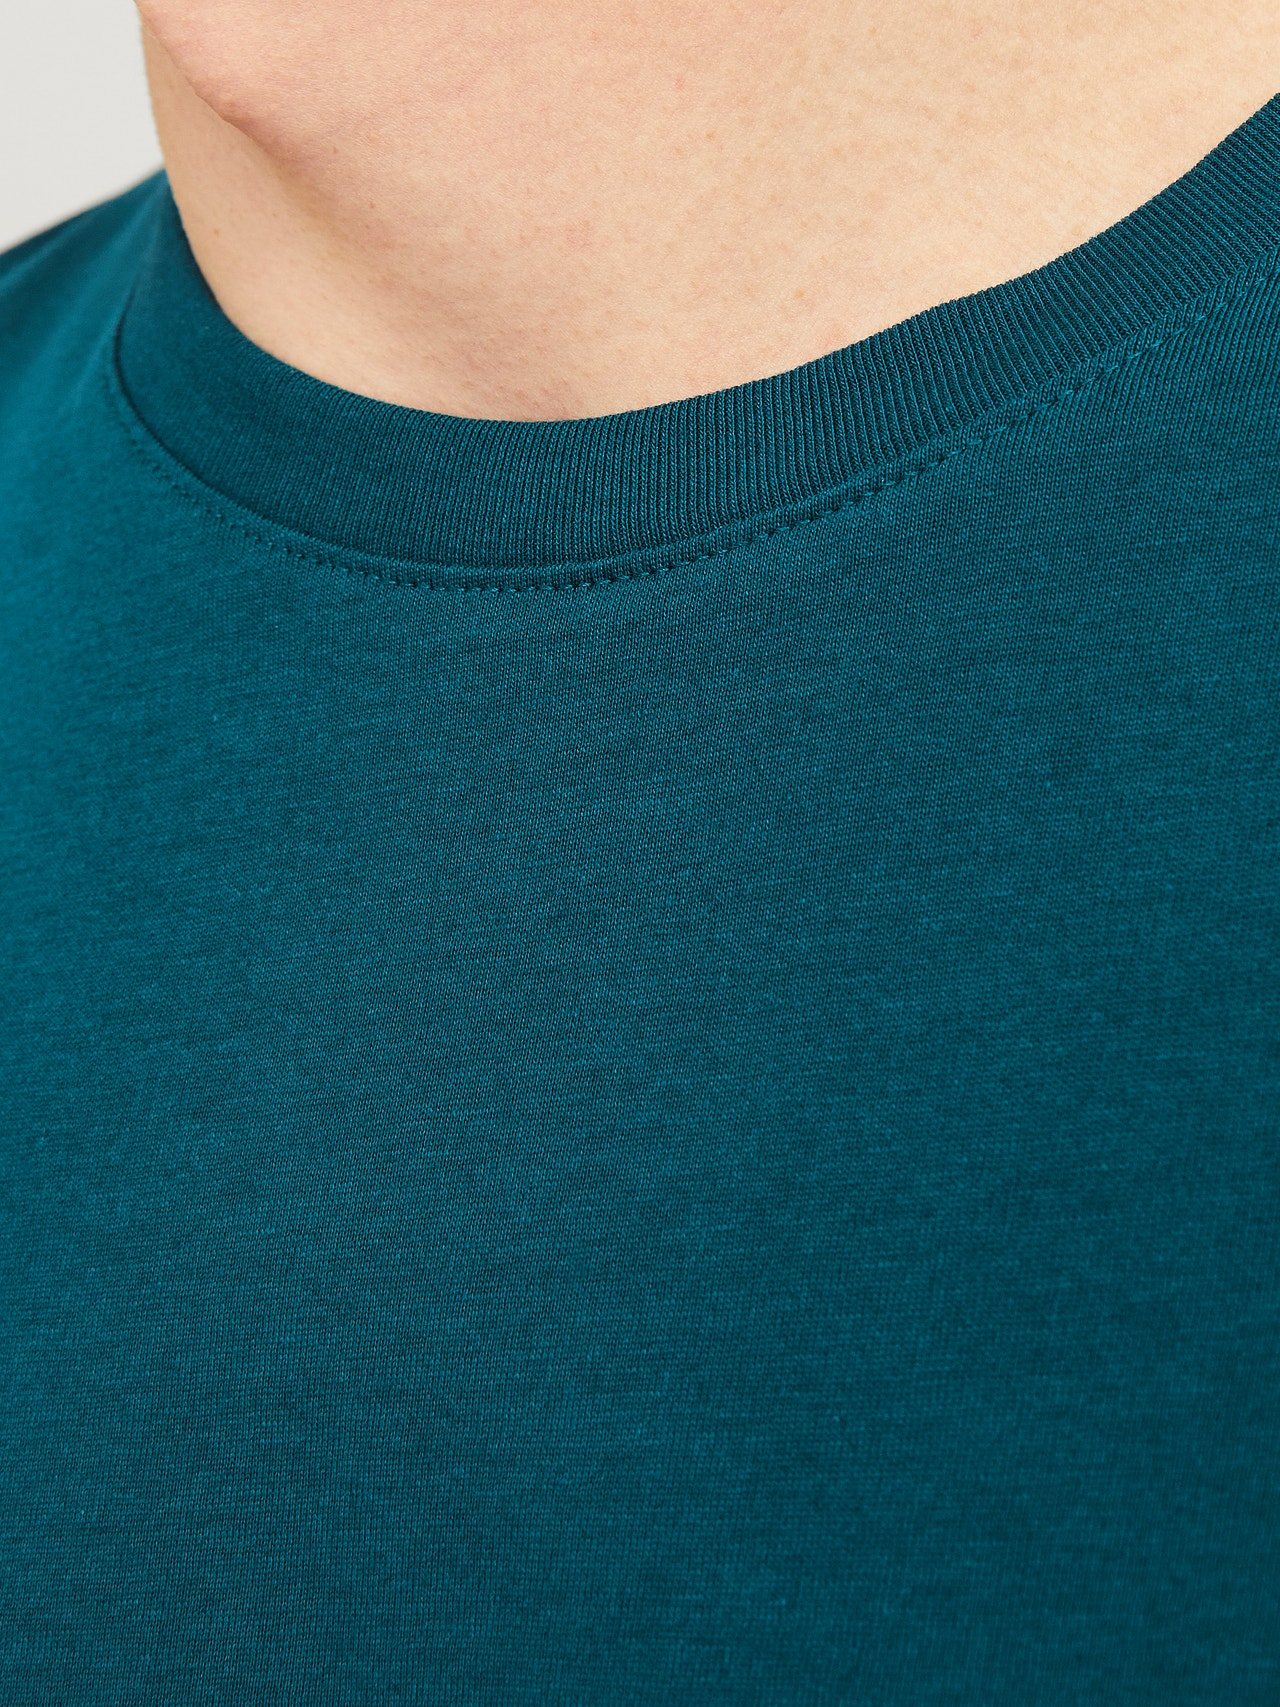 Jack & Jones Camiseta Liso Cuello redondo -Deep Teal - 12156101